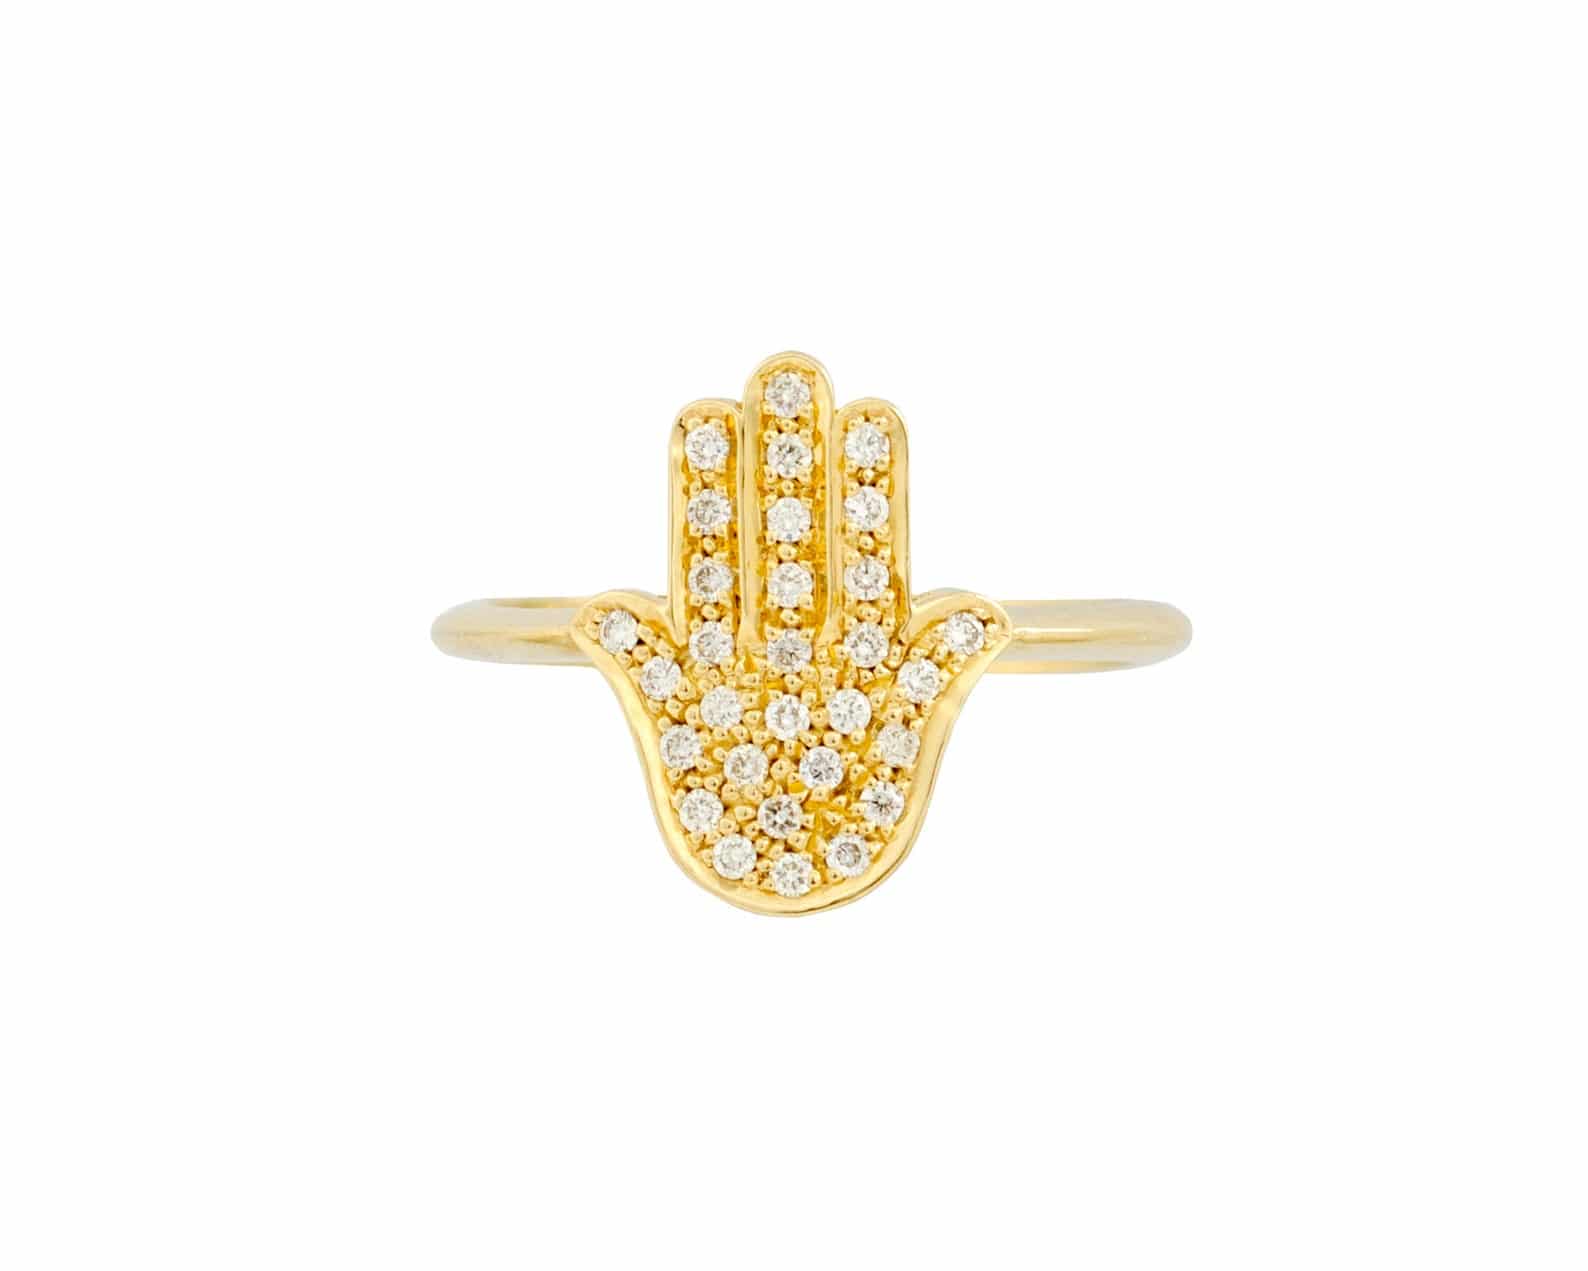 Stylish 14k Gold Hamsa Ring with Diamonds